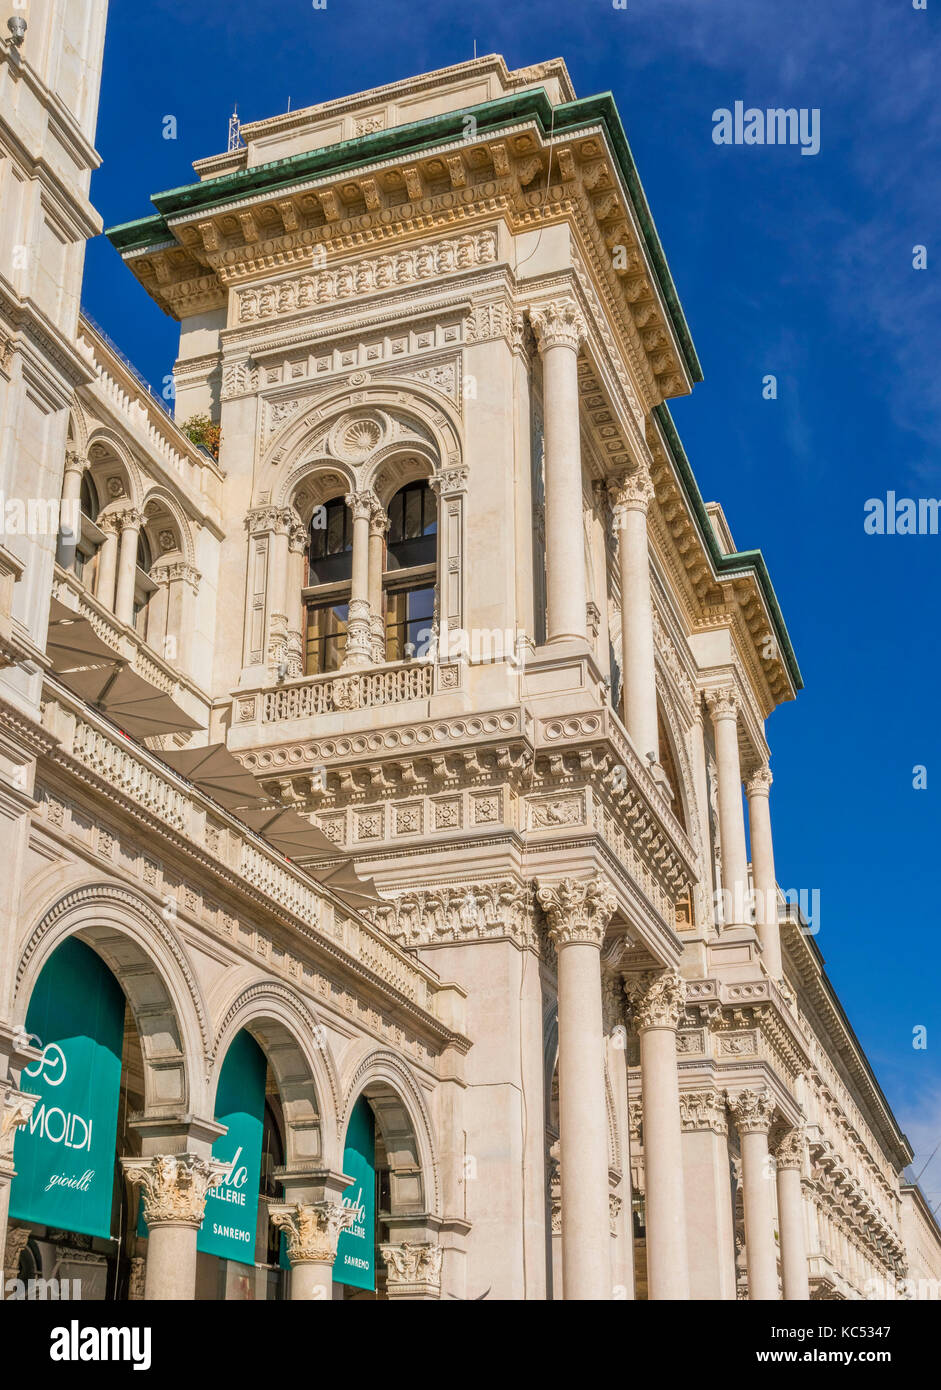 Facade of the Galleria Vittorio Emanuele II, Cathedral Square, Piazza del Duomo, Milan, Italy, Europe Stock Photo